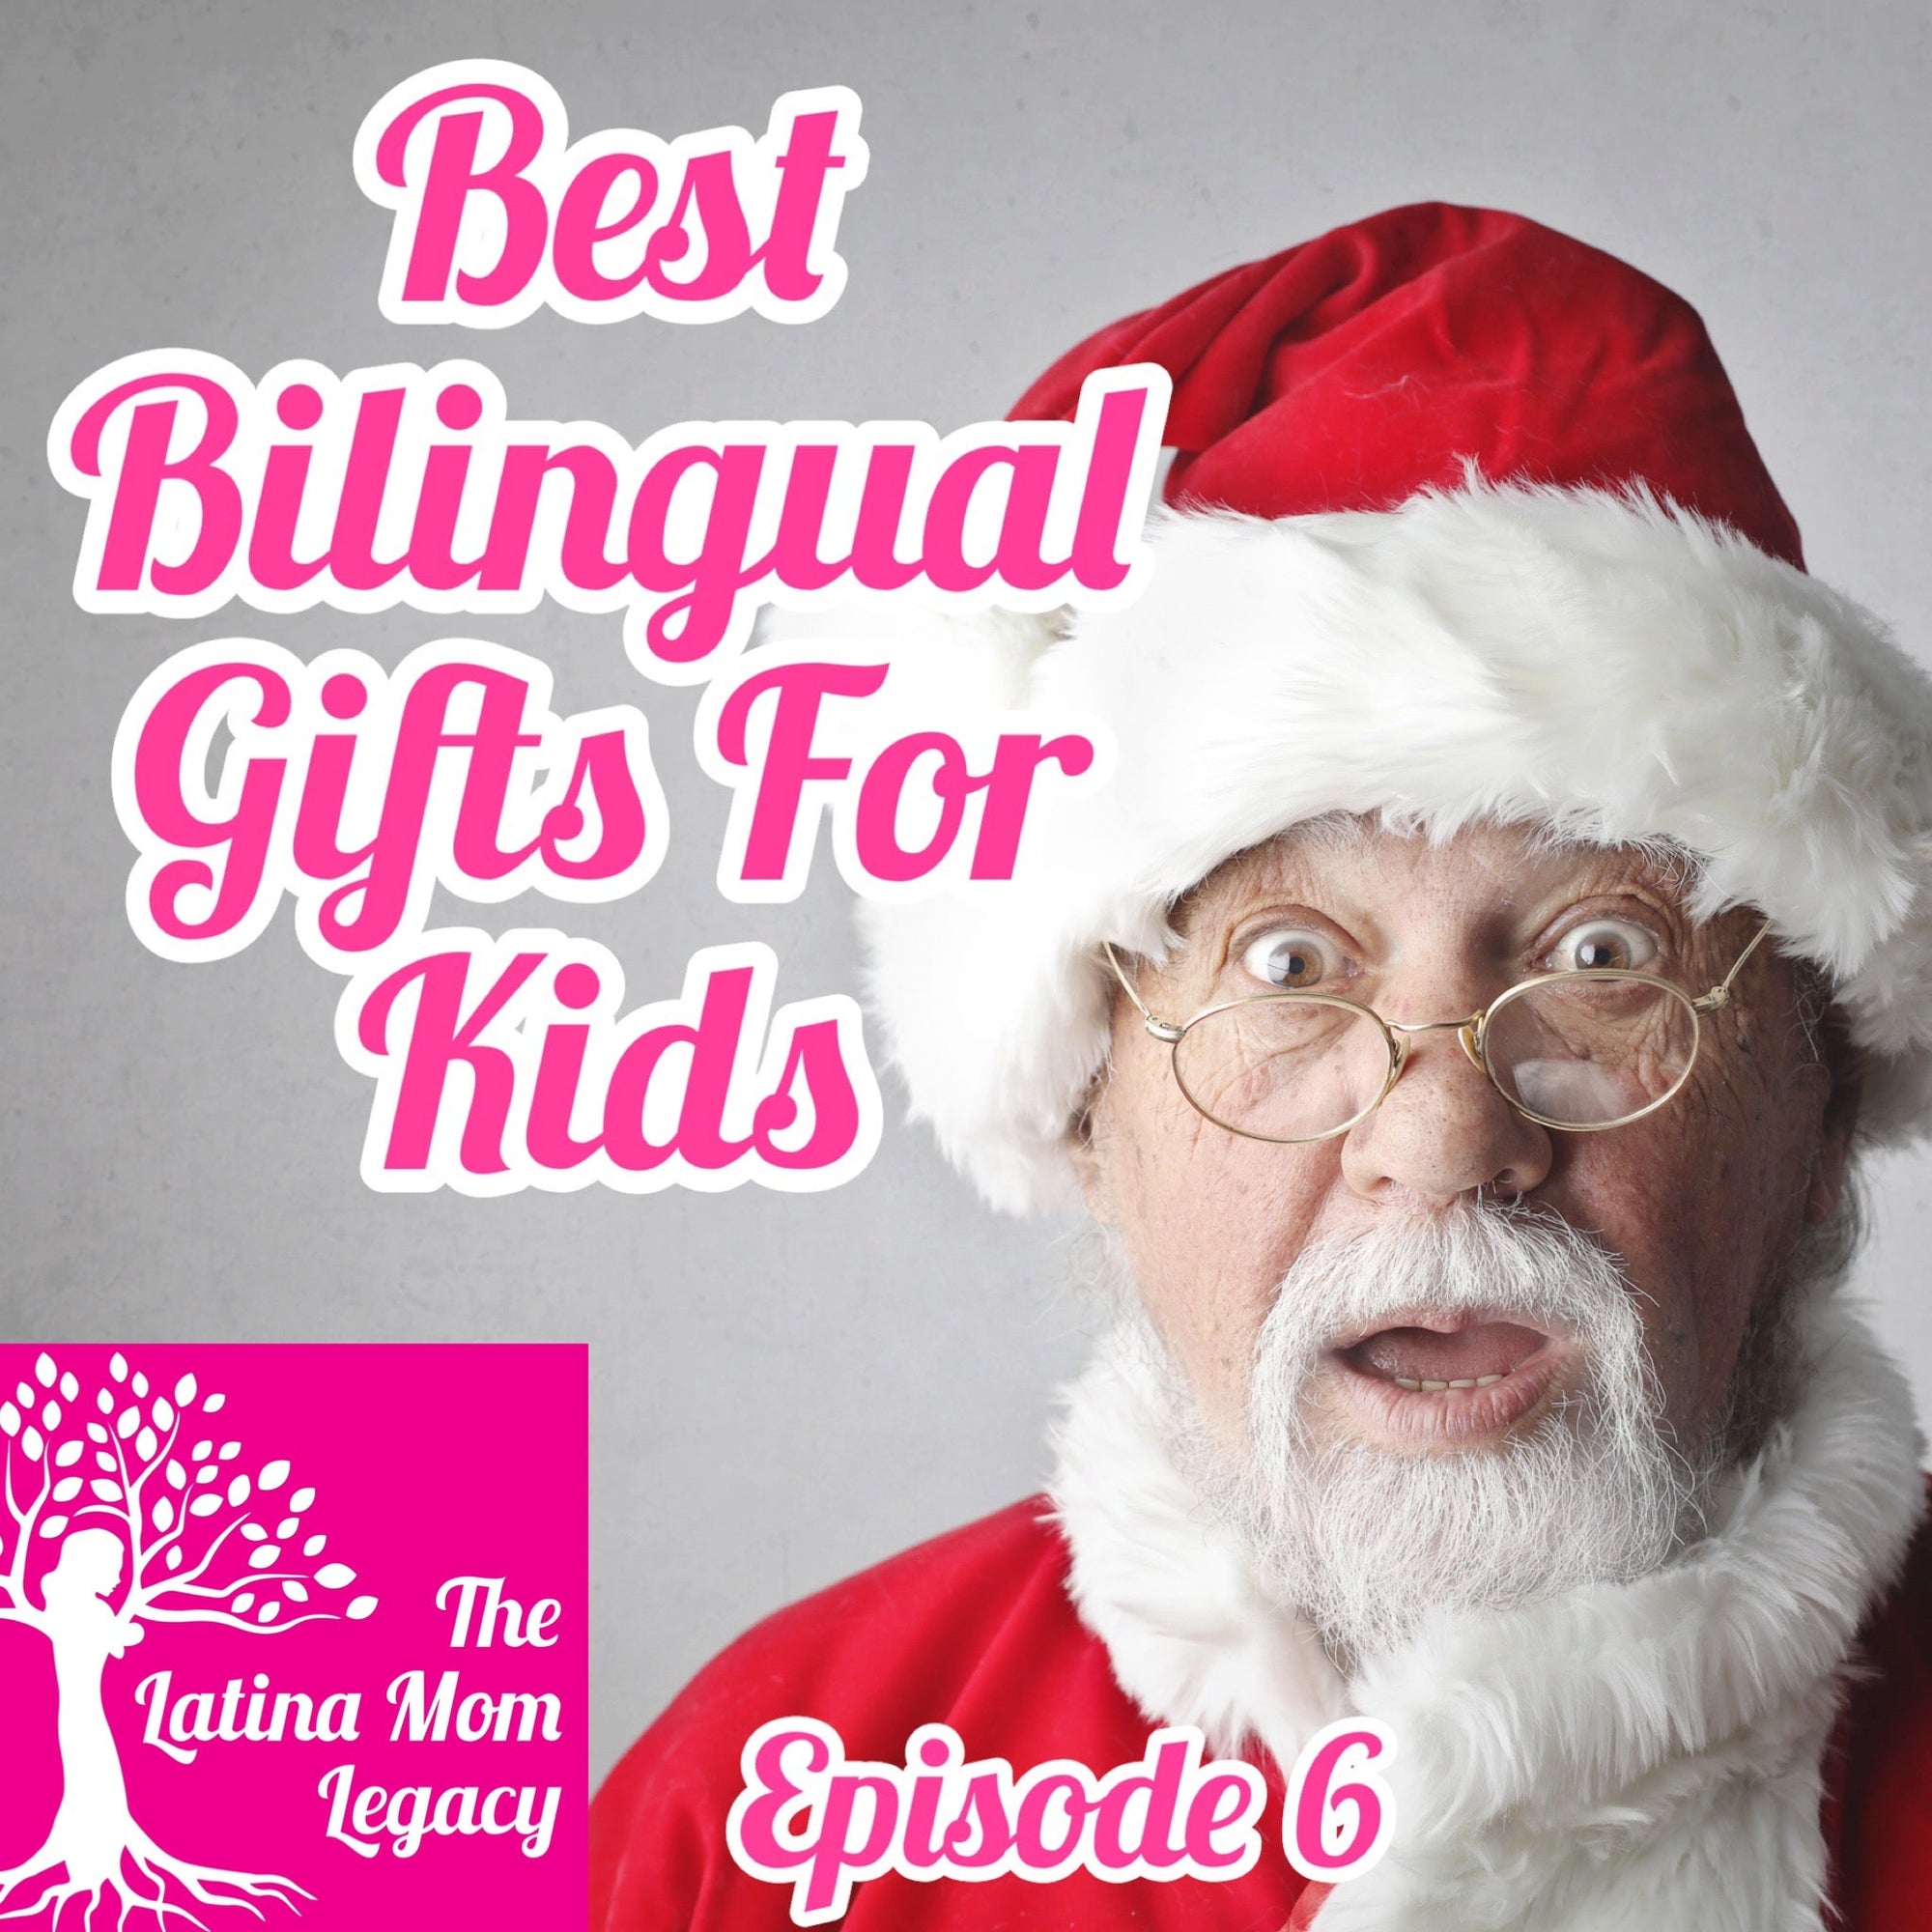 Episode 6 - The Latina Mom Legacy - Kids Bilingual Holiday Gift Guide - Mi LegaSi